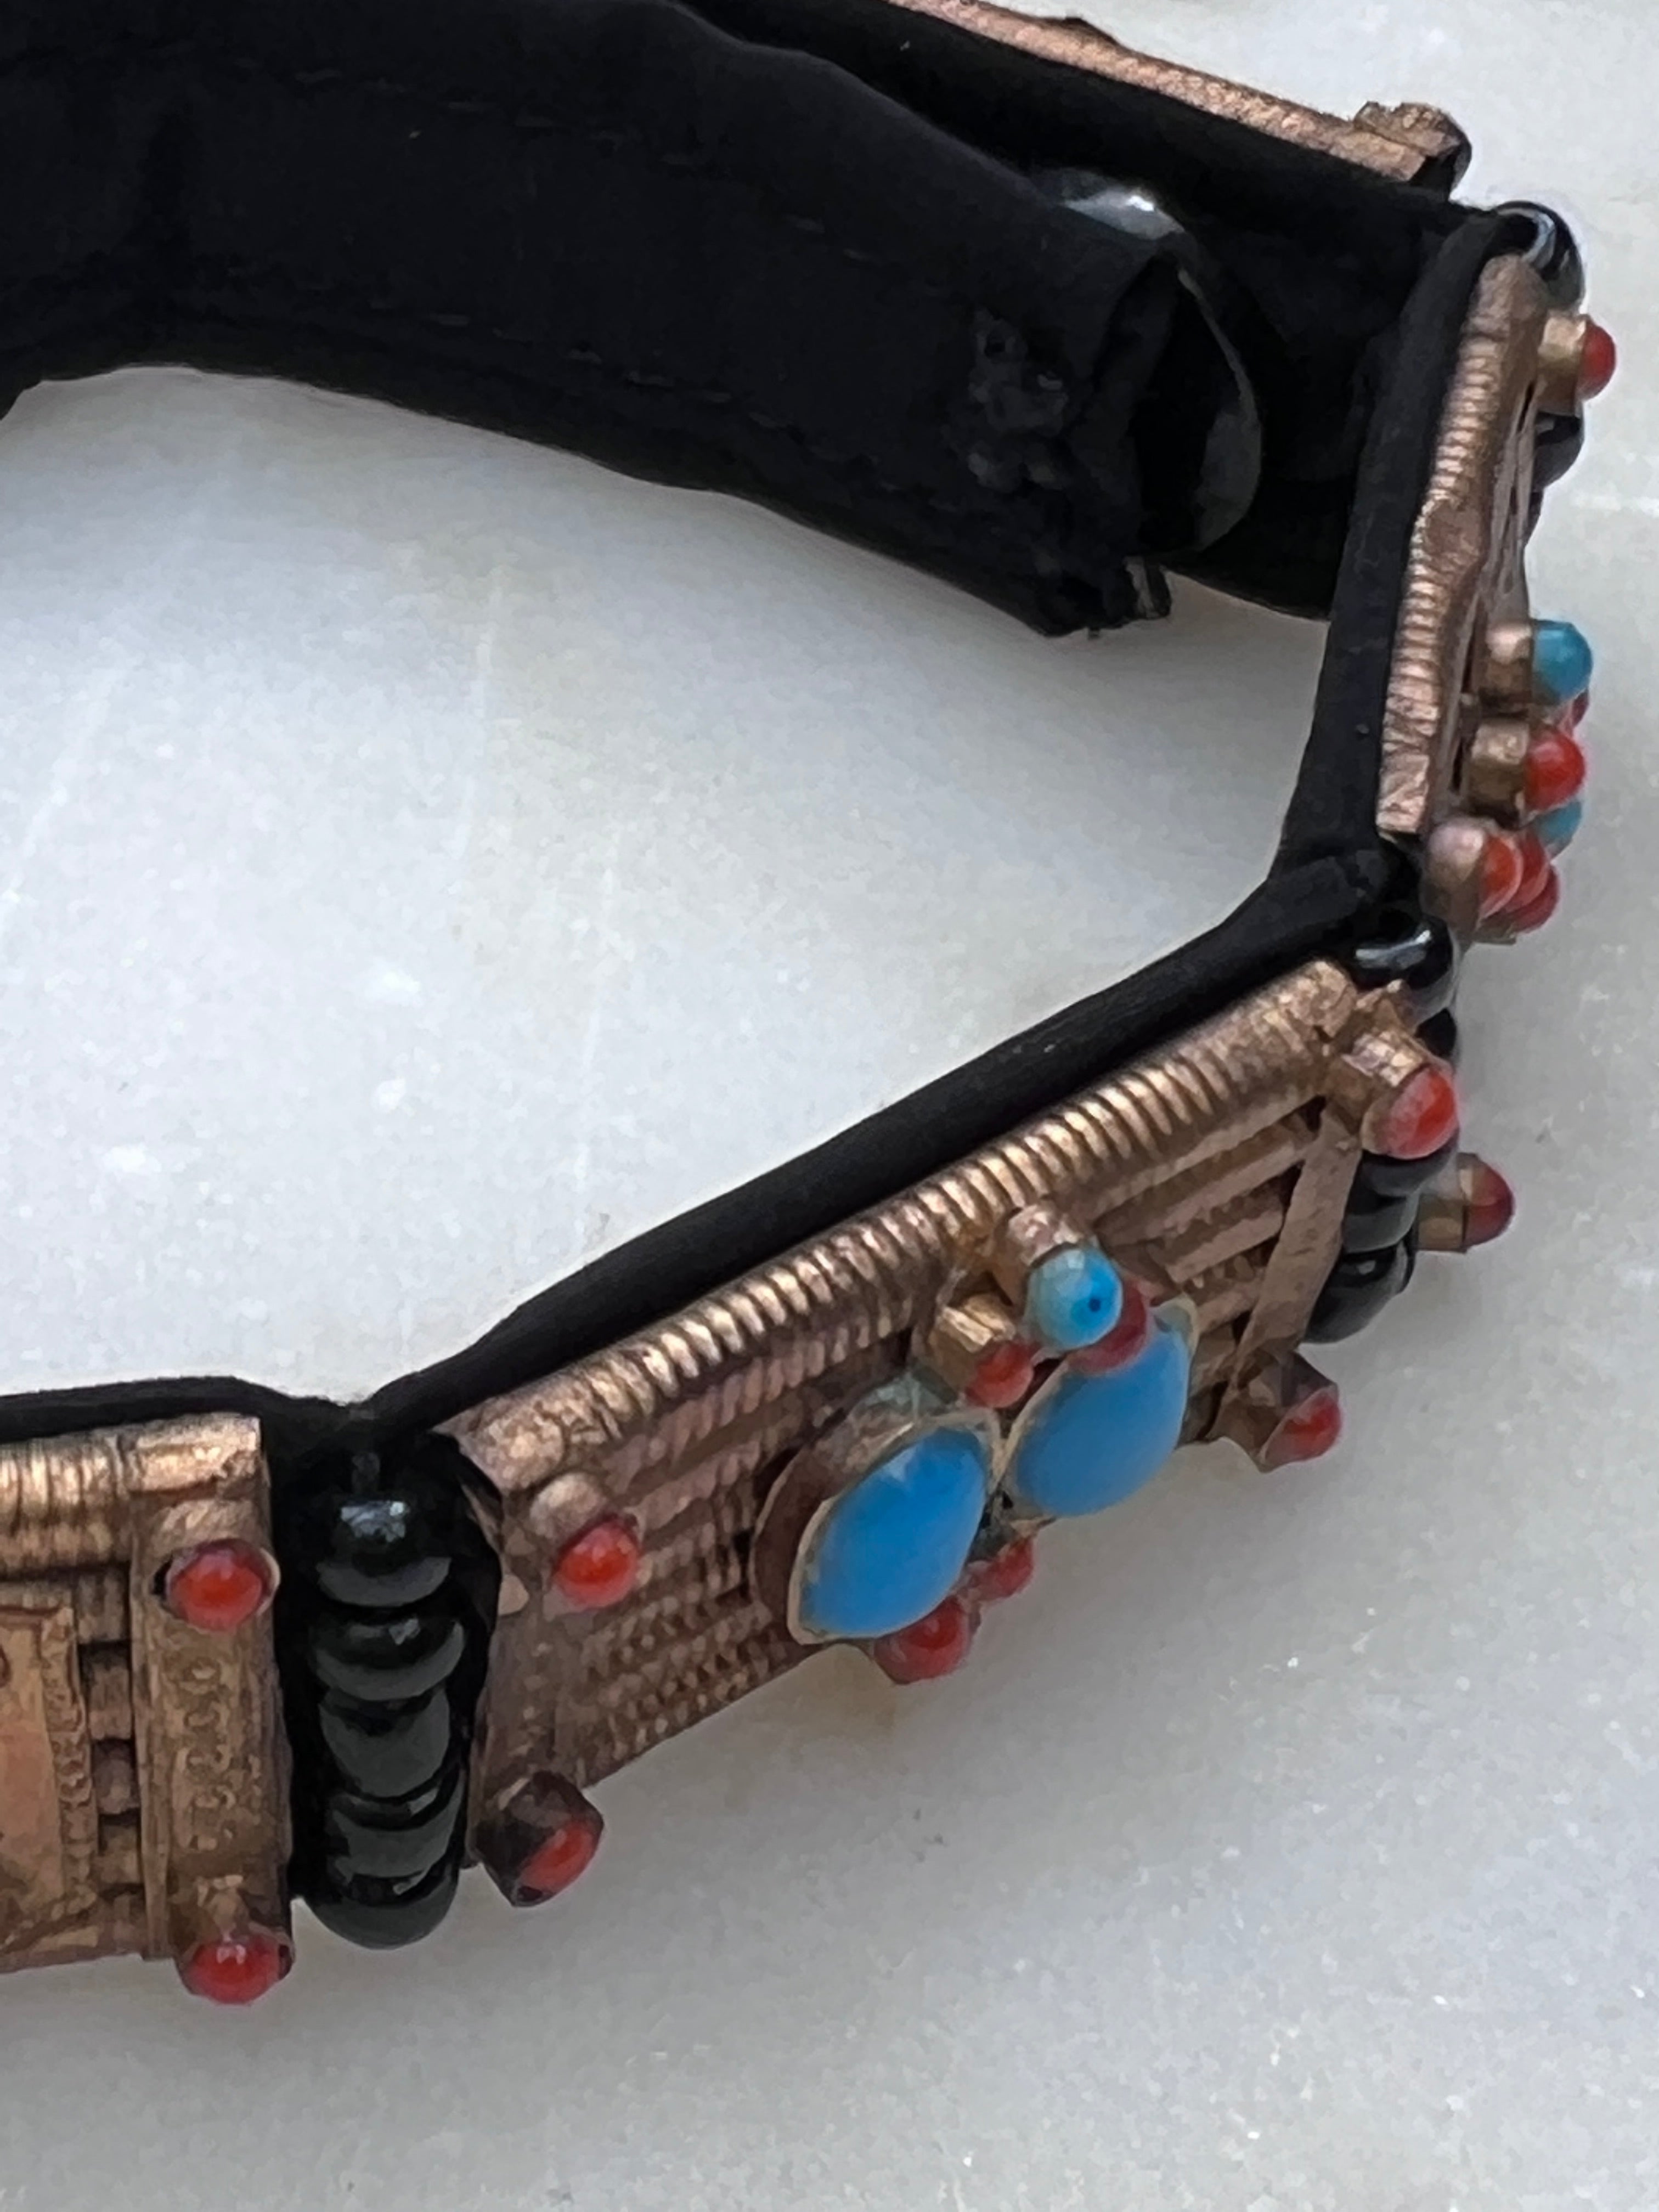 Future Nomads Necklaces 33cm Gold Plate Detail Choker 2